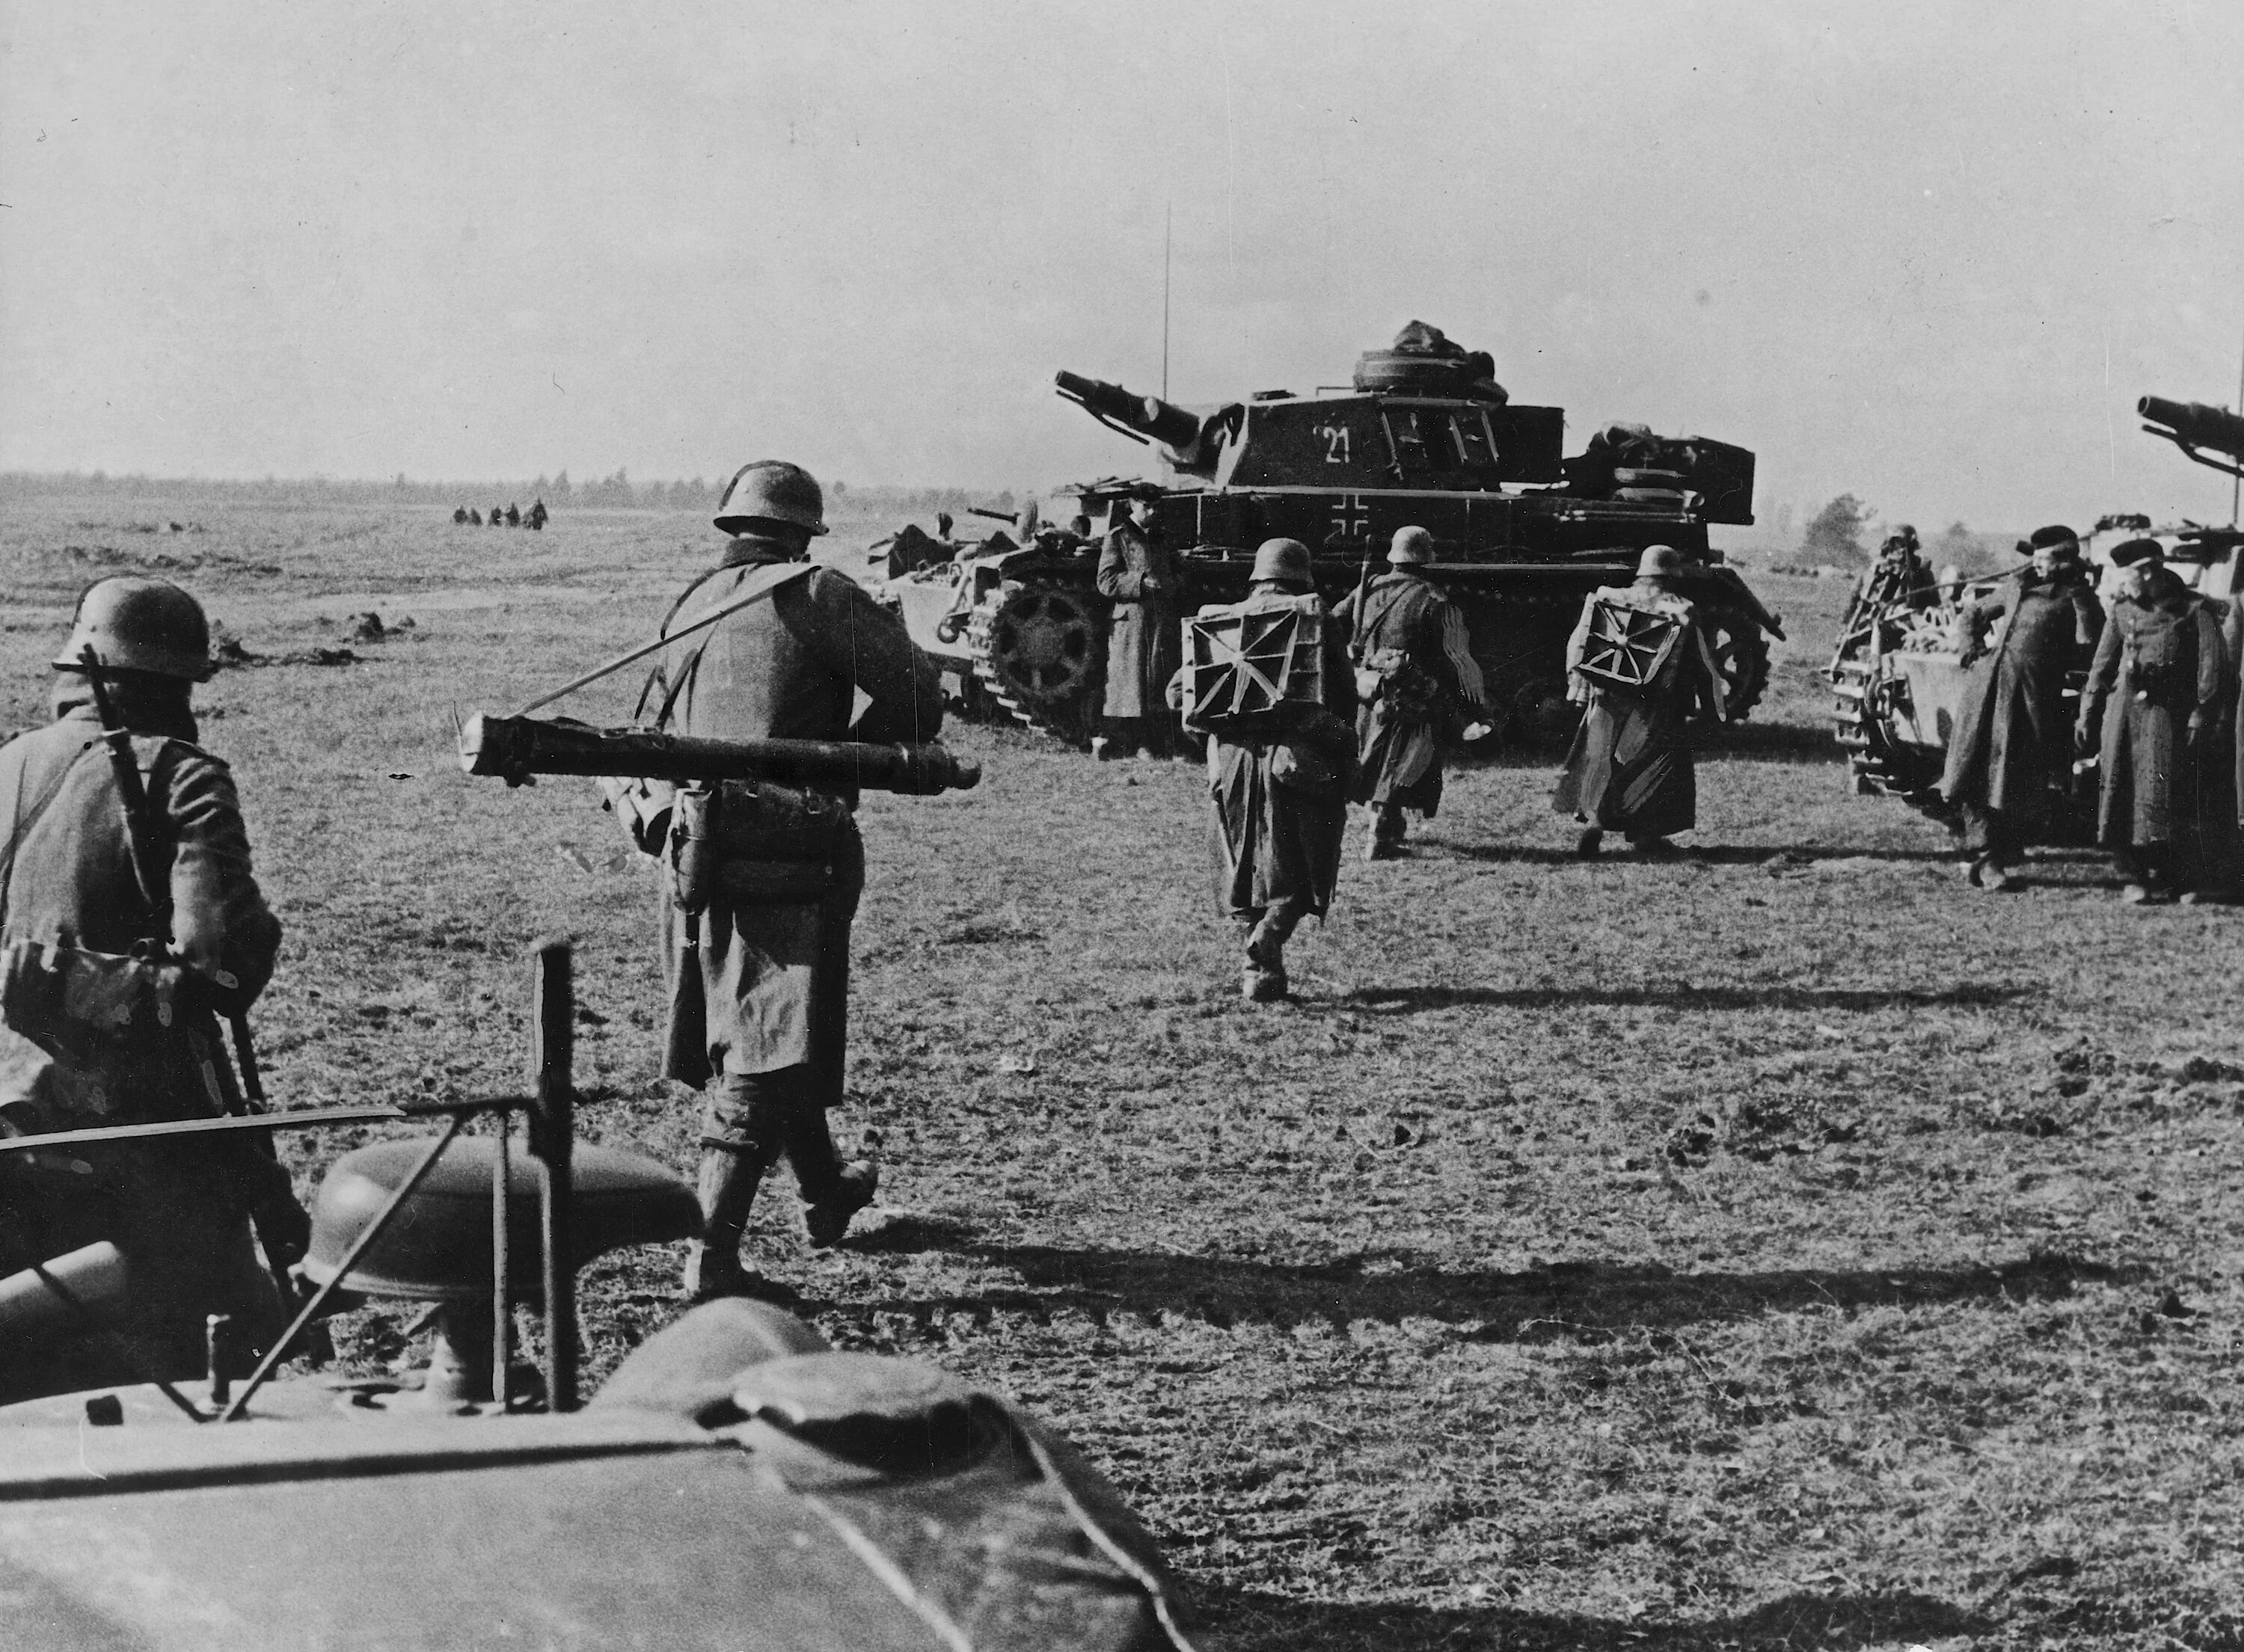 5 октября 1941. Бои под Вязьмой 1941. Немецкие танки од Вязьмой 1941. Бои под Вязьмой в октябре 1941 года. Катастрофа под Вязьмой 1941.